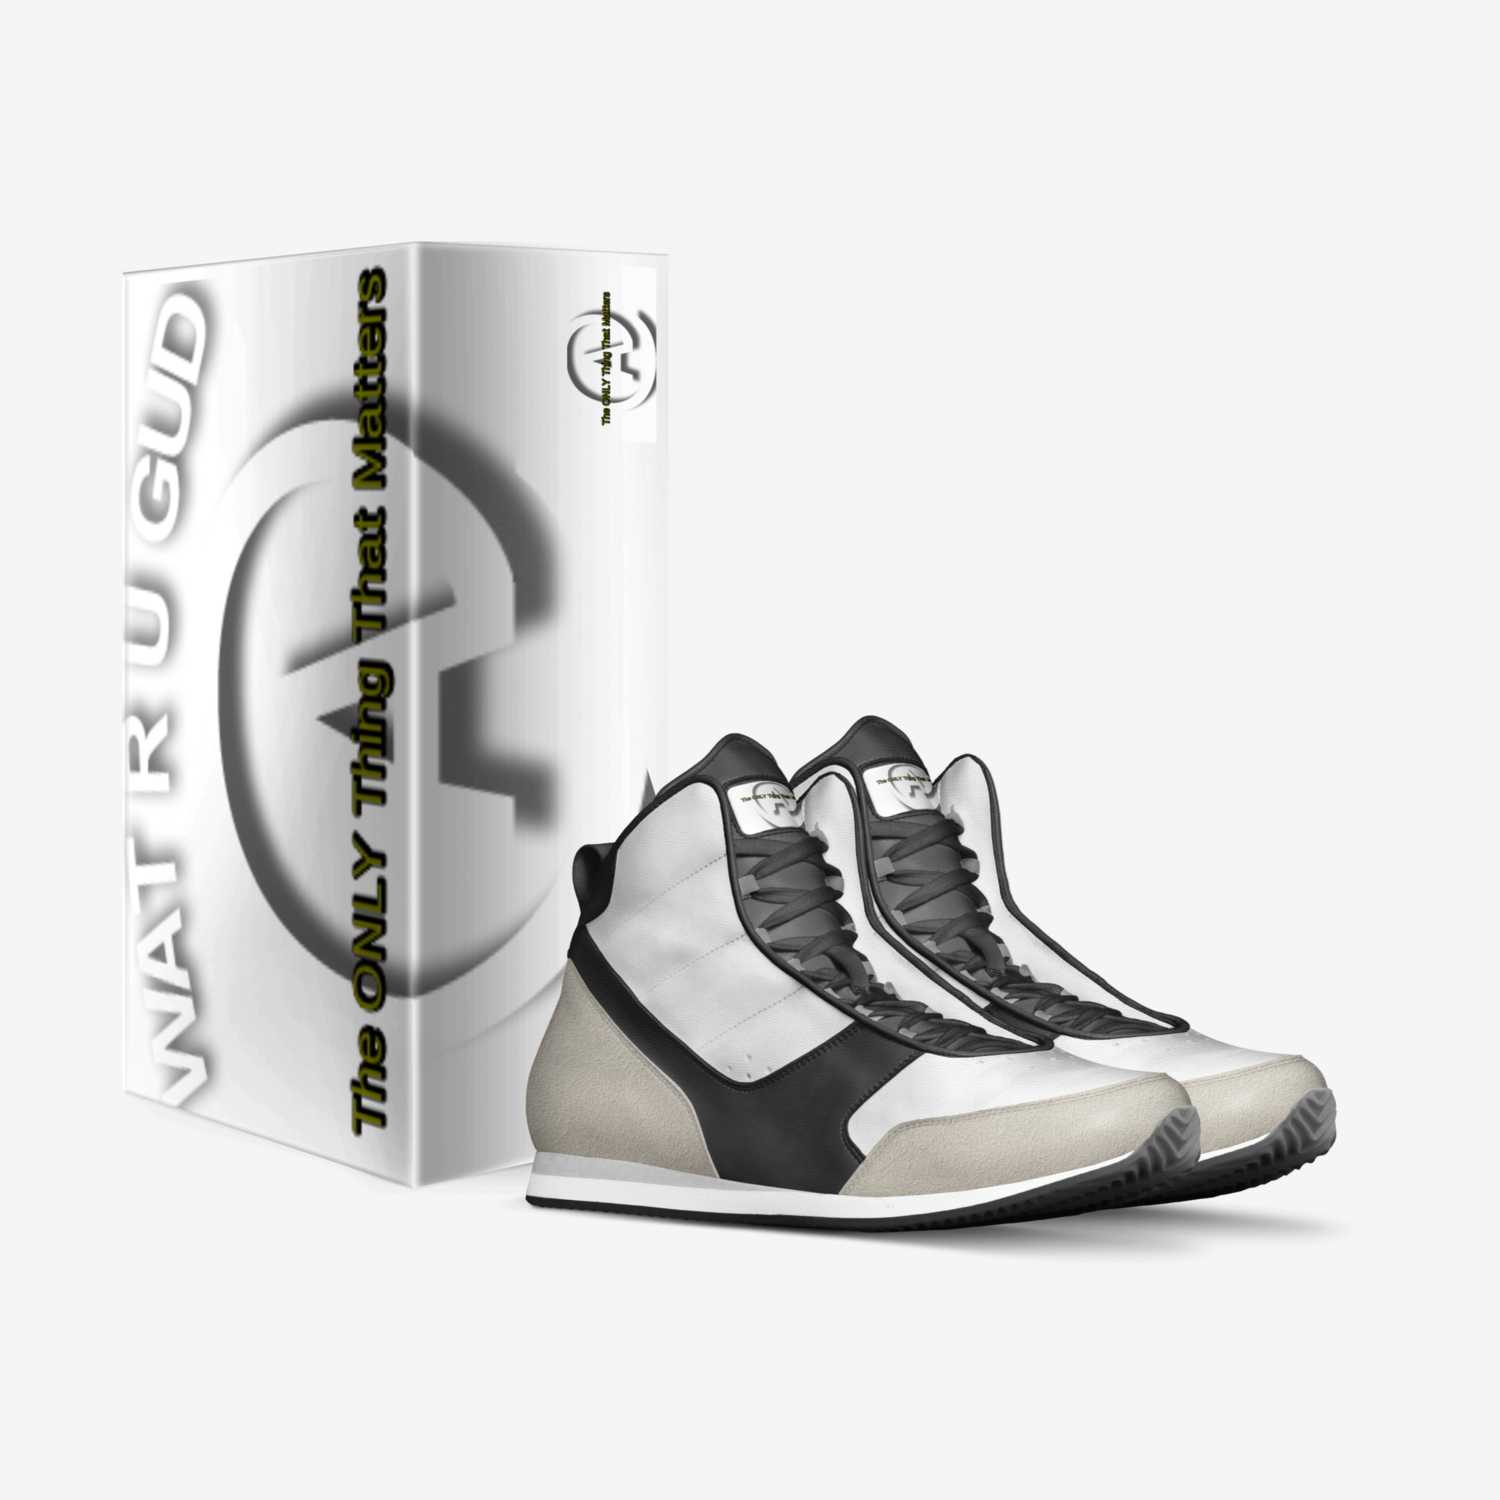 @ethr.1%K®0$$0v€®™ custom made in Italy shoes by Dr. Watrugudat | Box view